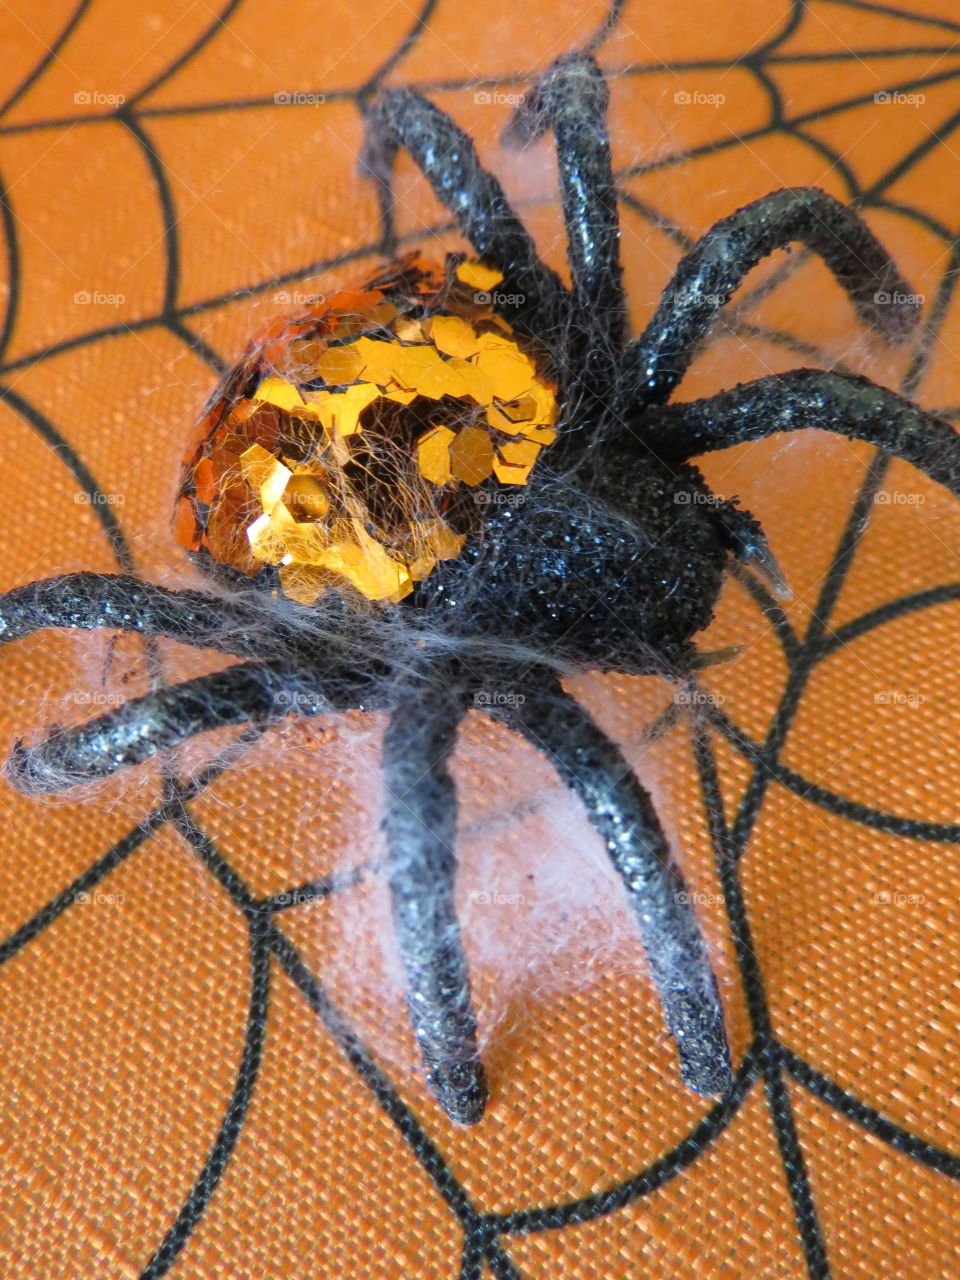 Scary Halloween Spider.